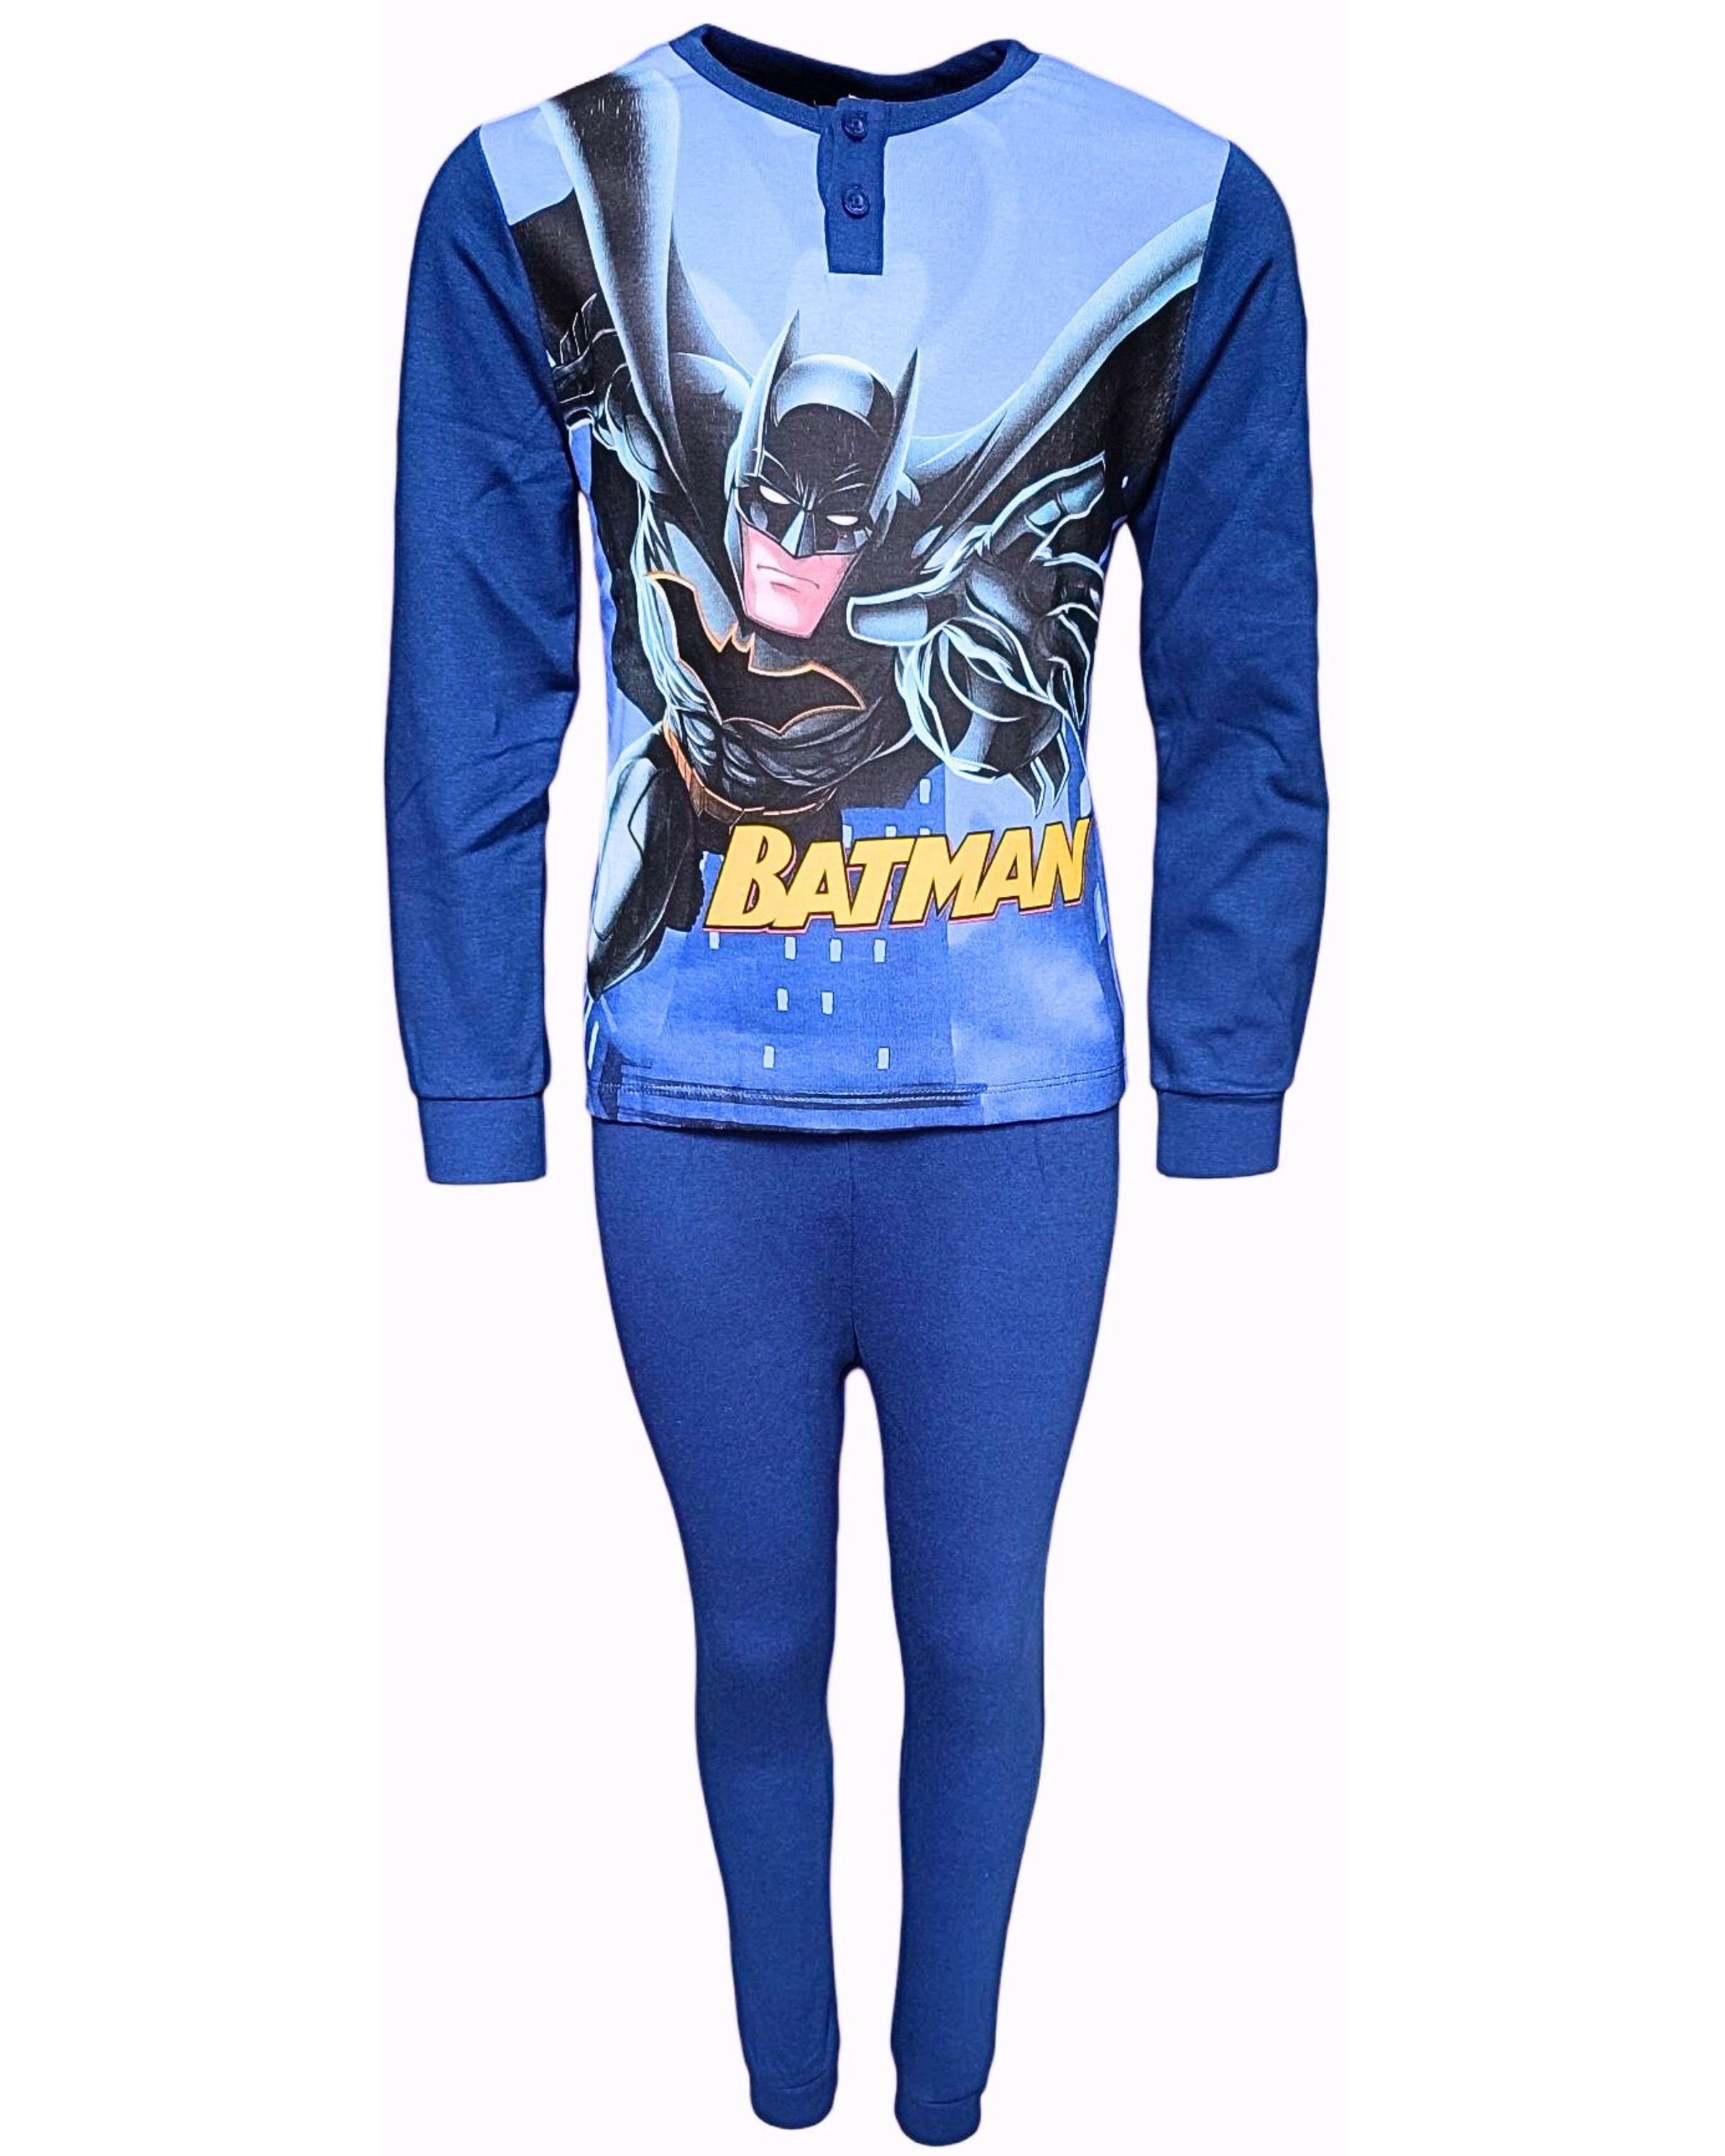 Dunkelblau Batman Jungen Gr. Pyjama cm 98-128 Schlafanzug langarm (2 tlg)